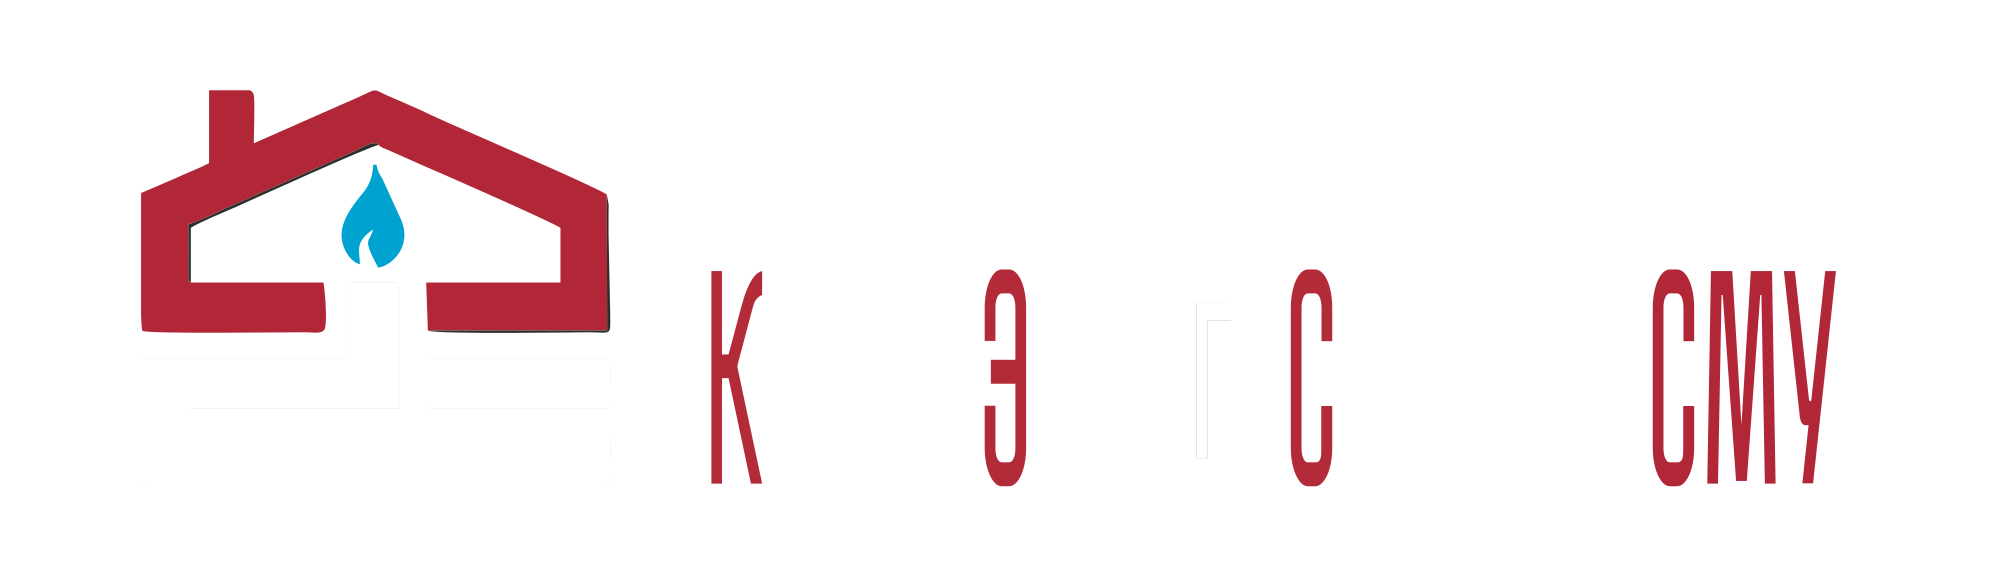 ООО Котлоэнергосервис СМУ - логотип